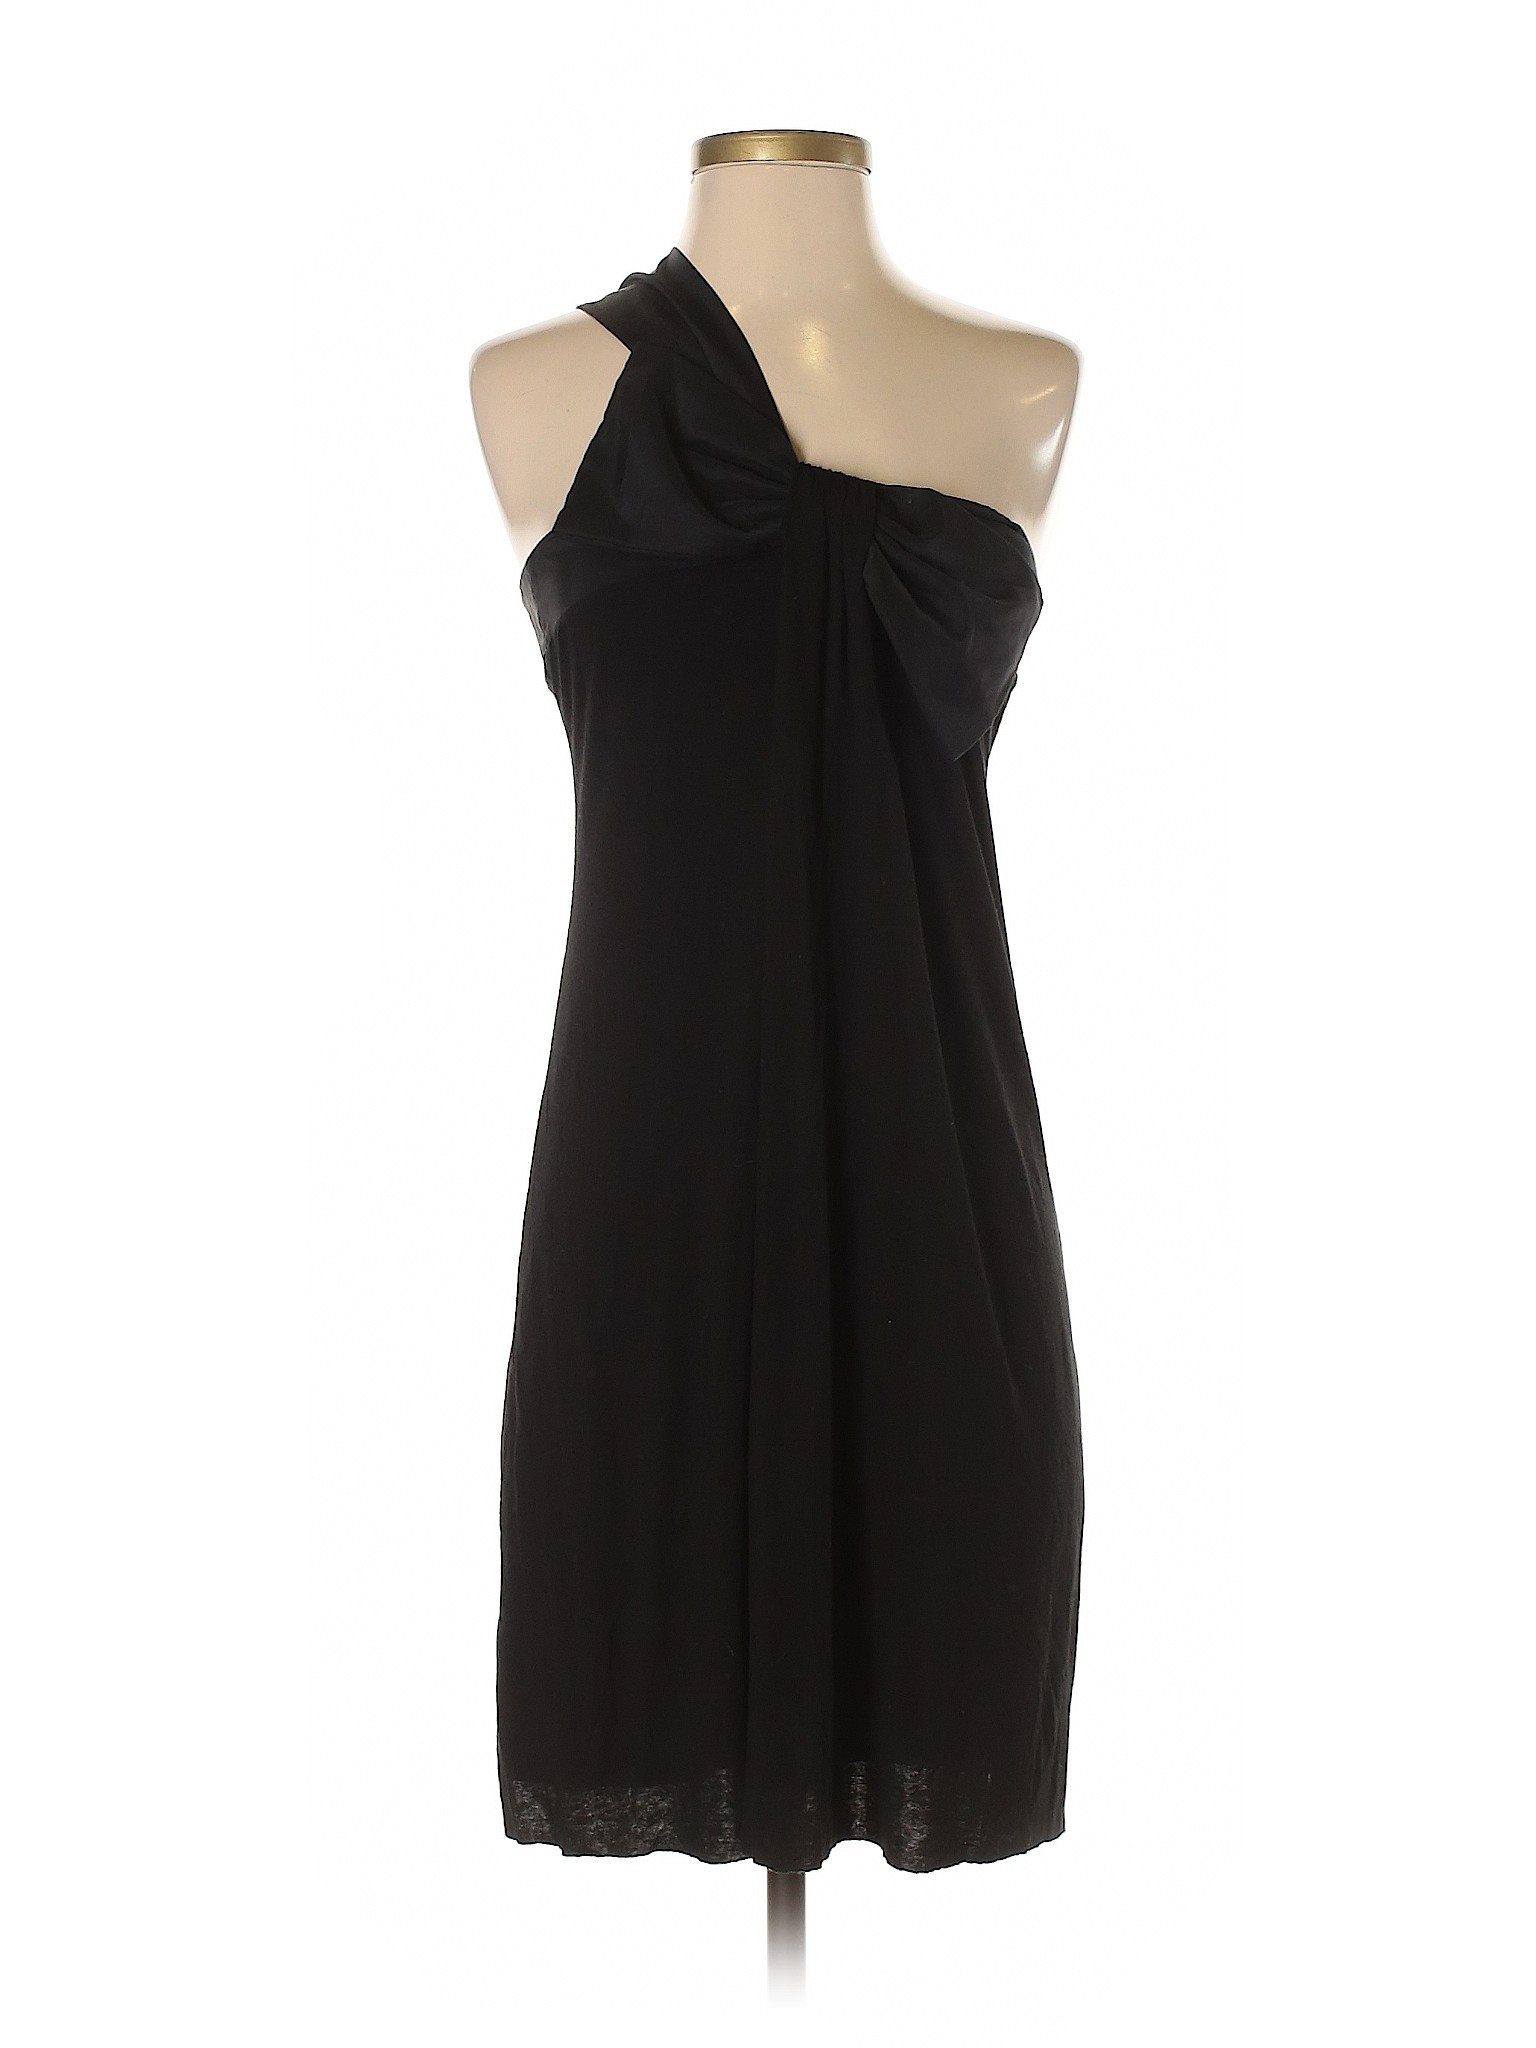 Bailey 44 Women Black Cocktail Dress XS | eBay